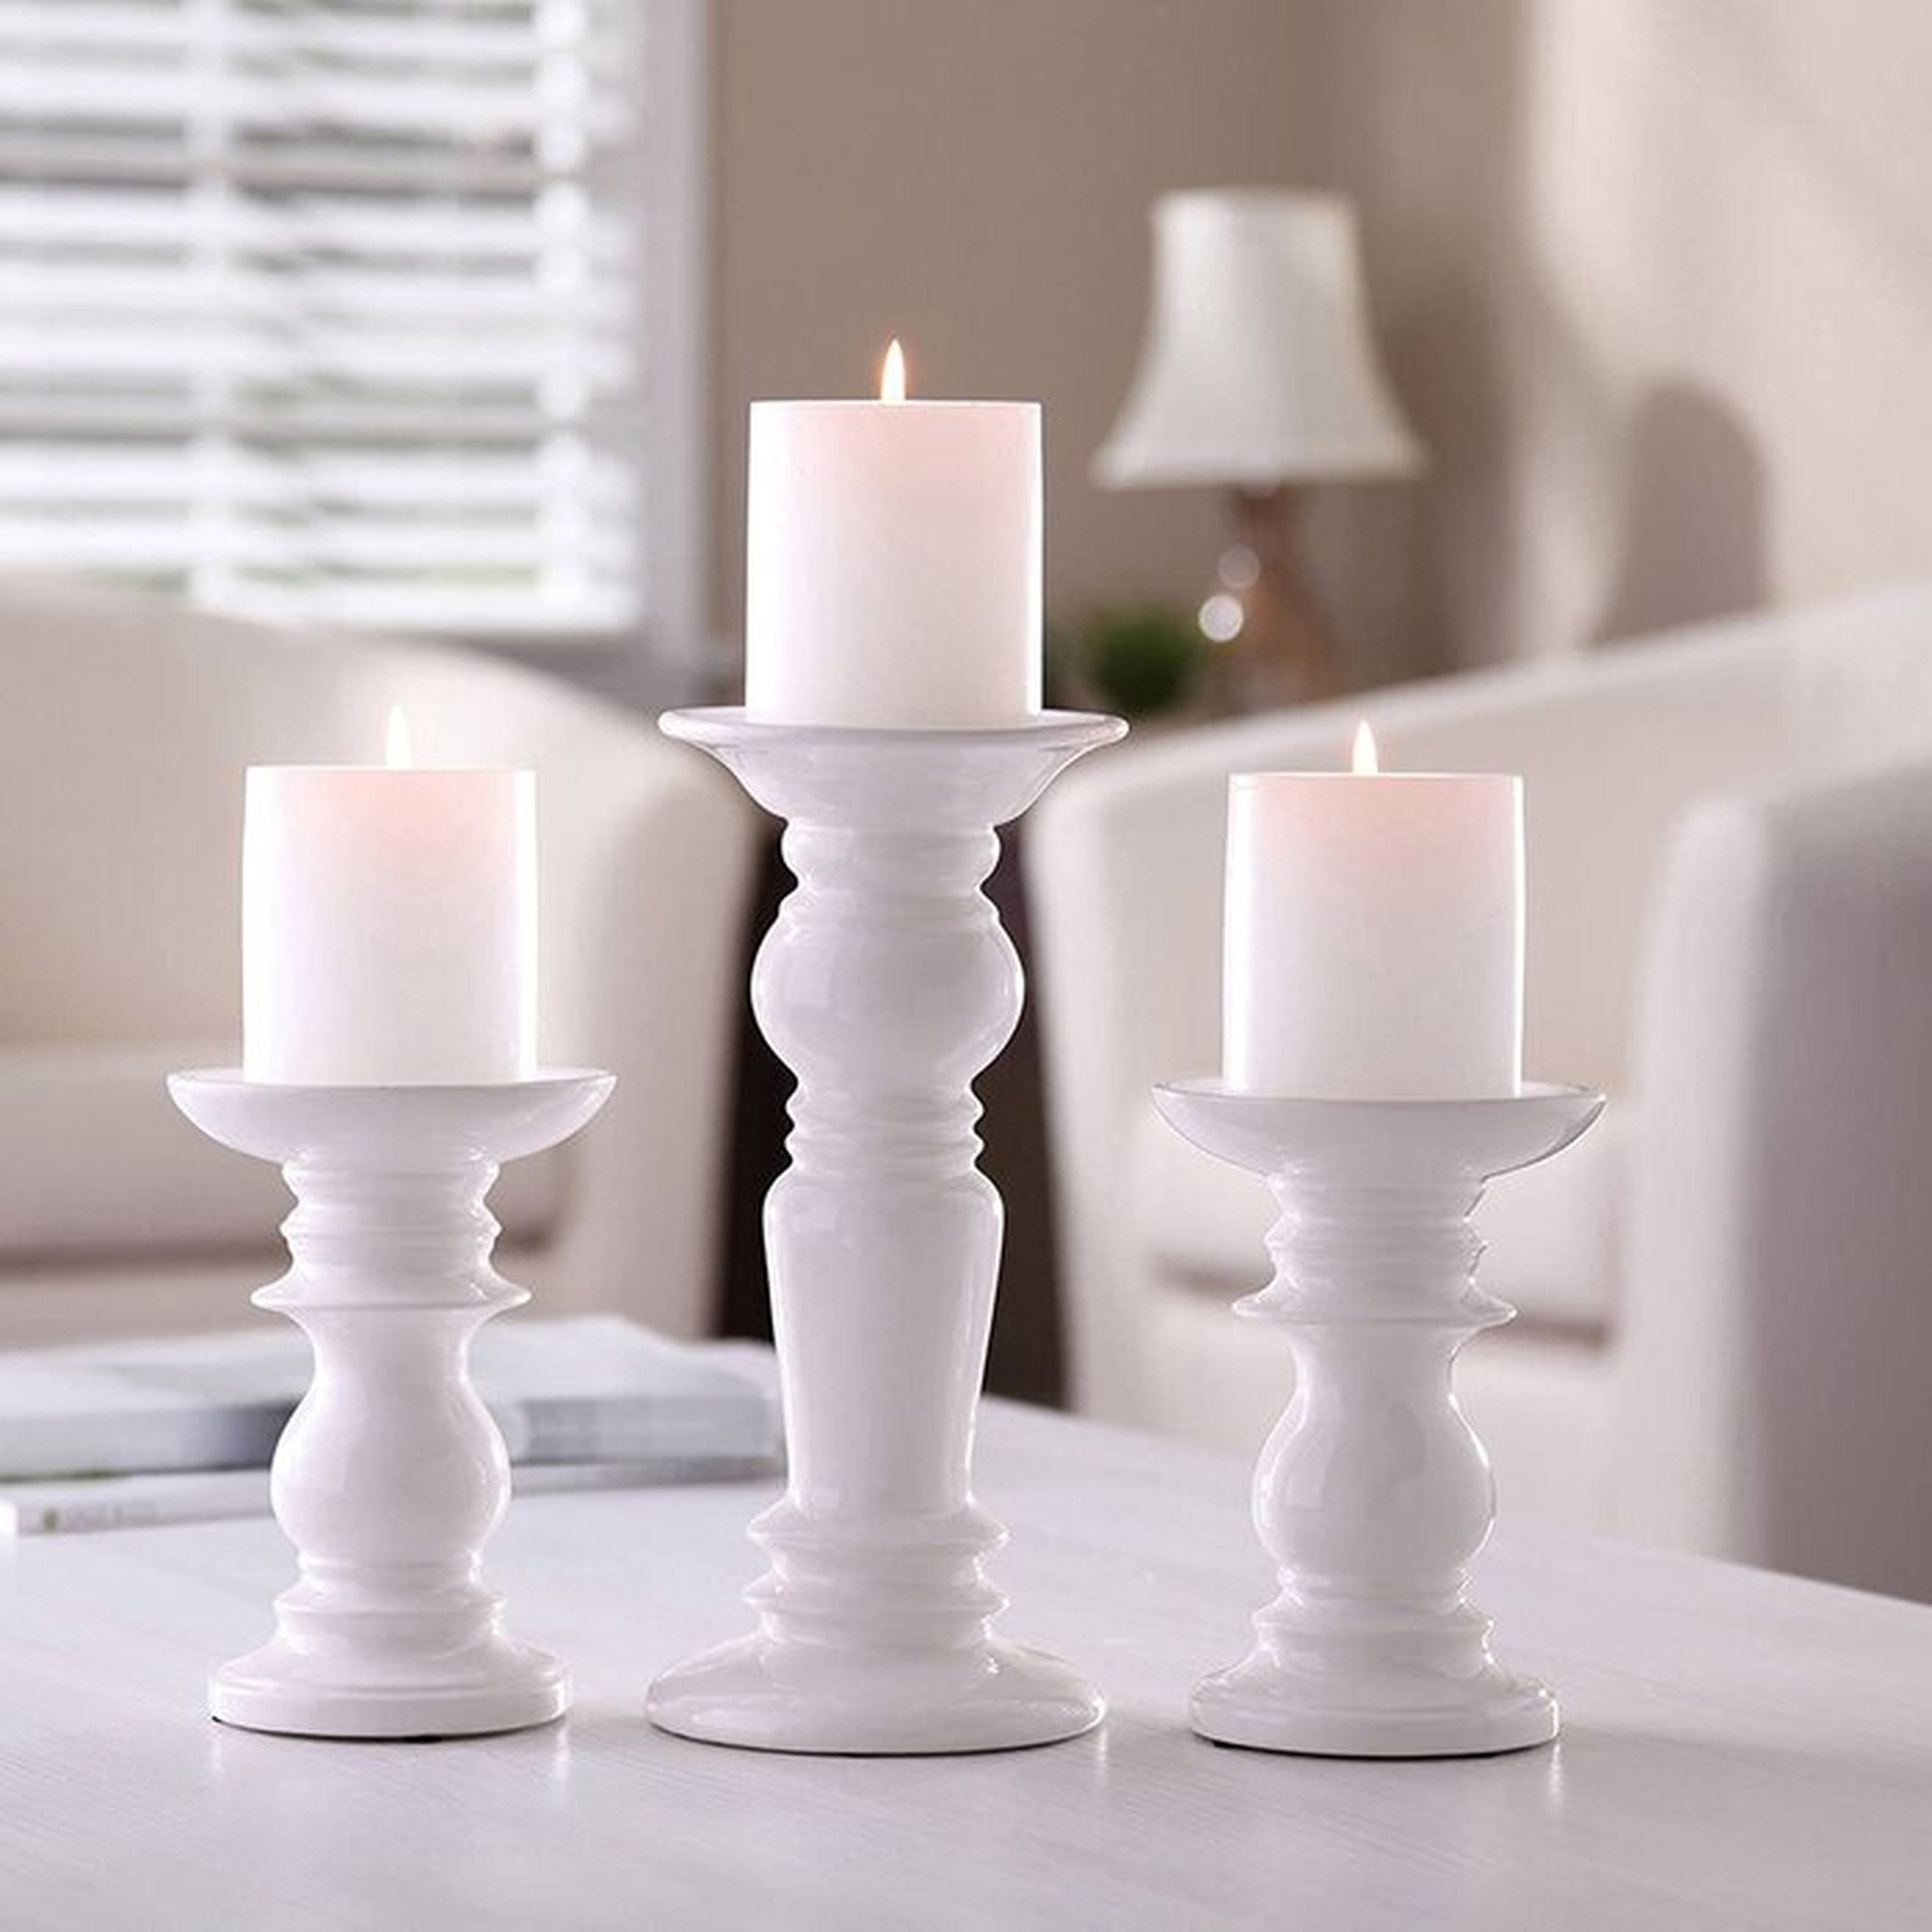 3 Piece Porcelain Tabletop Candlestick Set - Wayfair